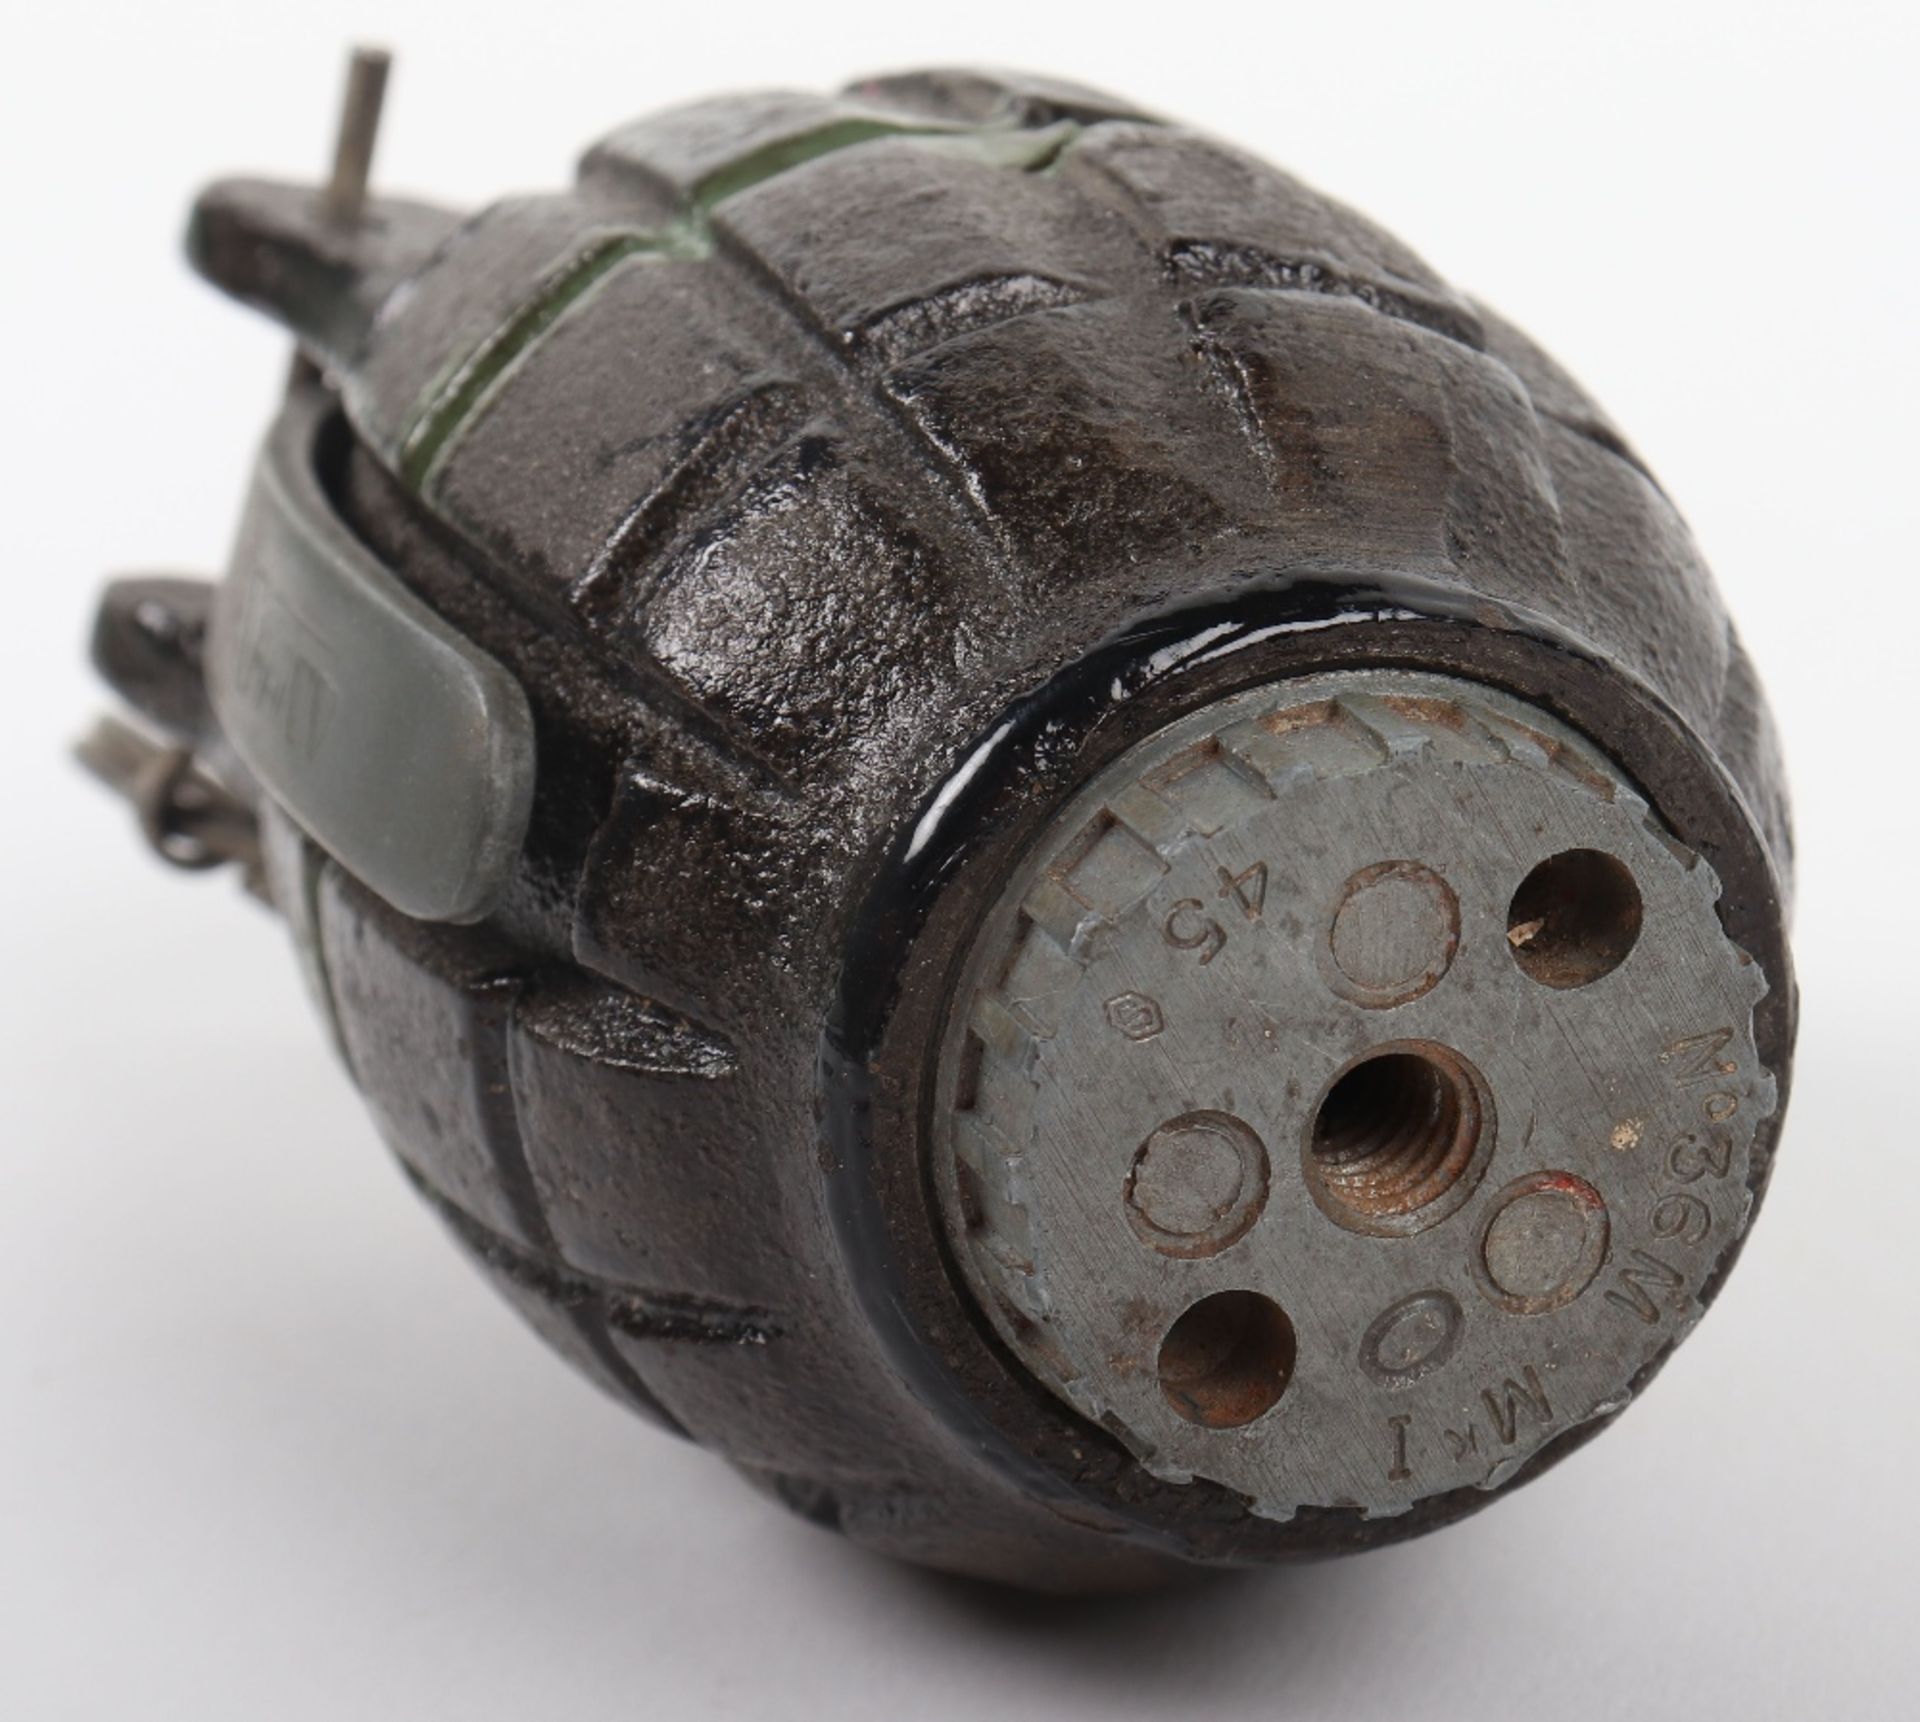 Inert British Mills Hand Grenade - Image 4 of 4